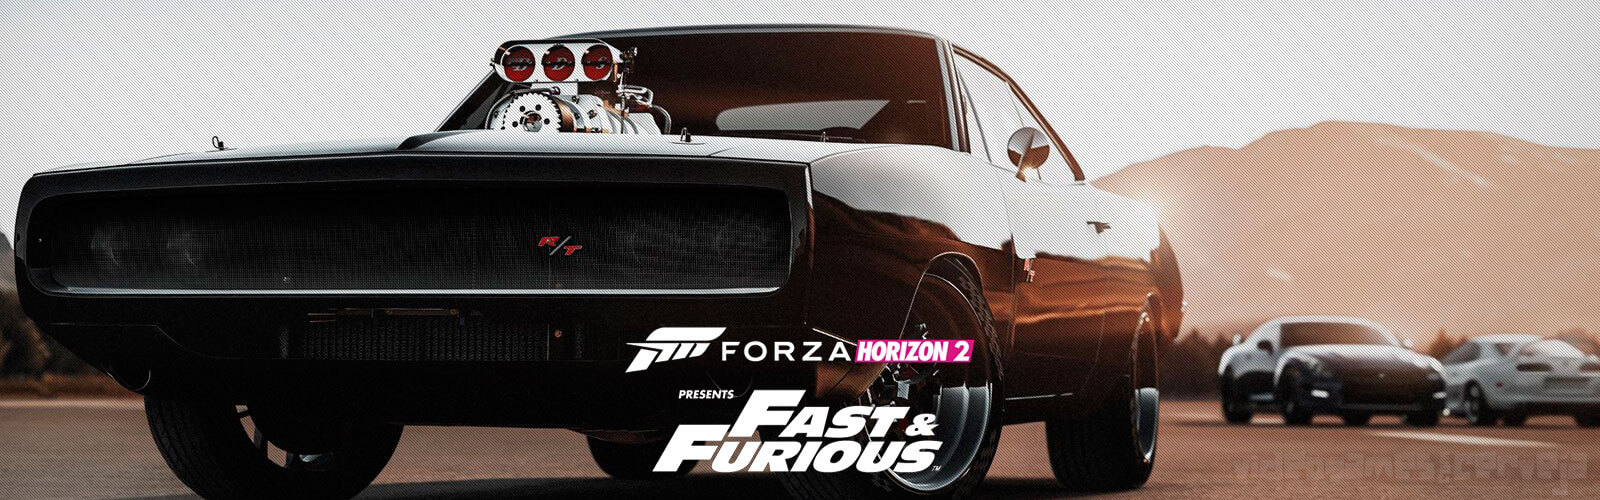 Análise - Forza Horizon 2: Fast & Furious (Xbox 360) Cover